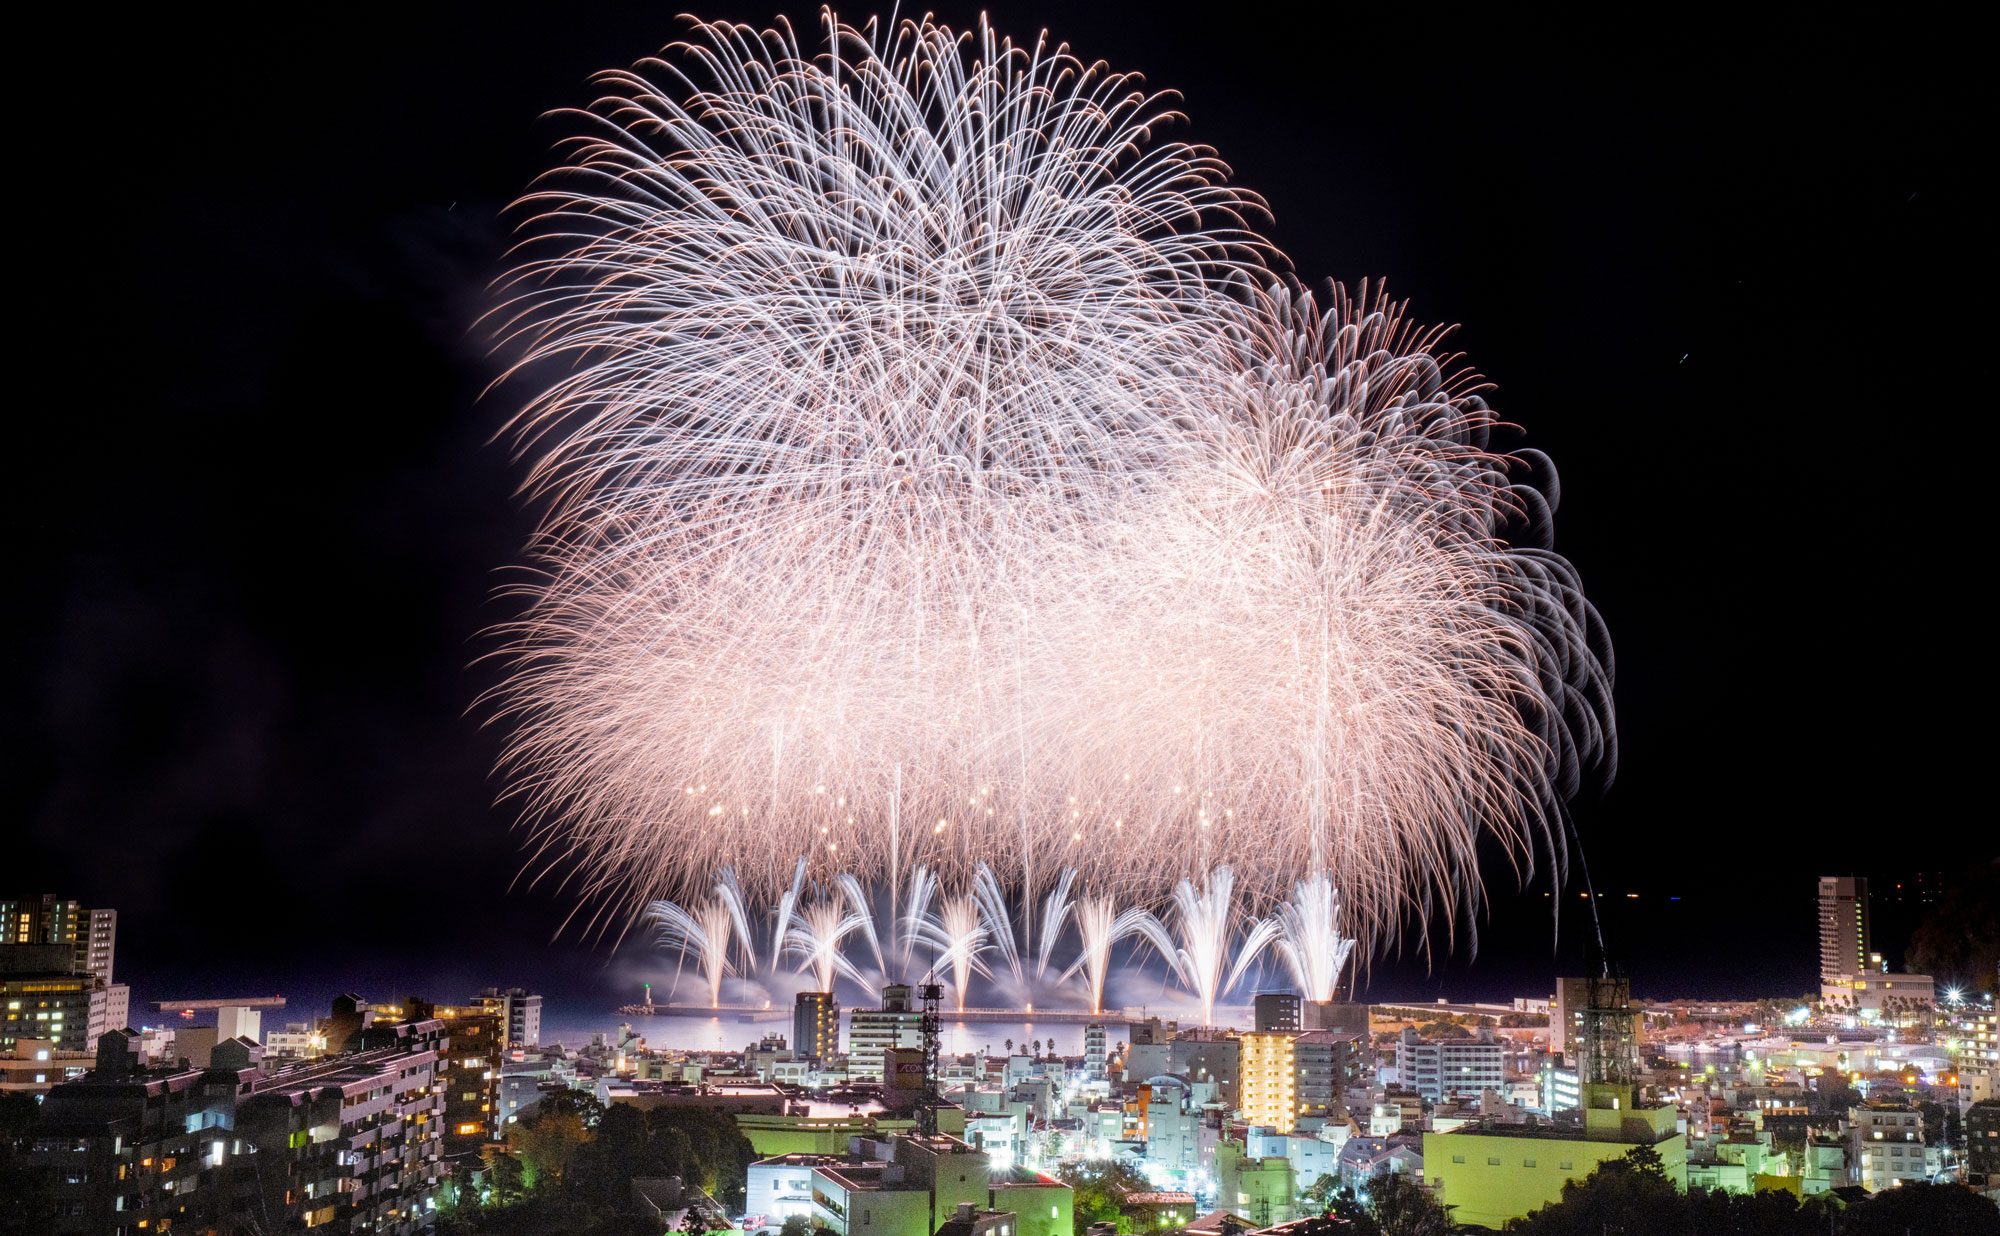 Atami Fireworks Festival Niagara